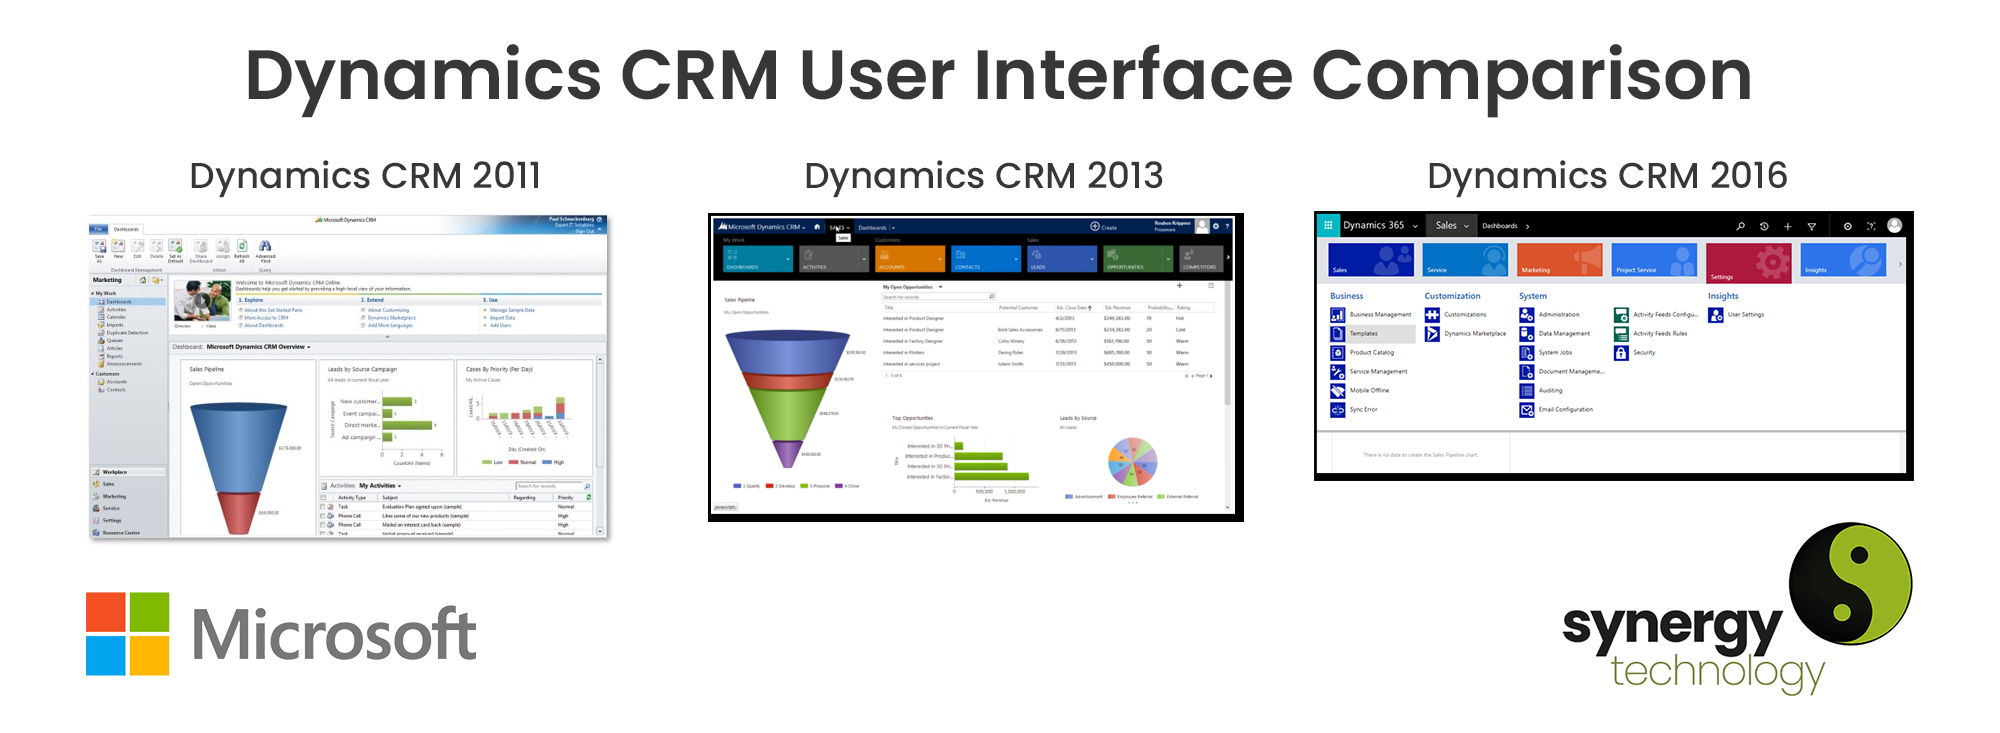 Dynamics CRM User Interface Comparison